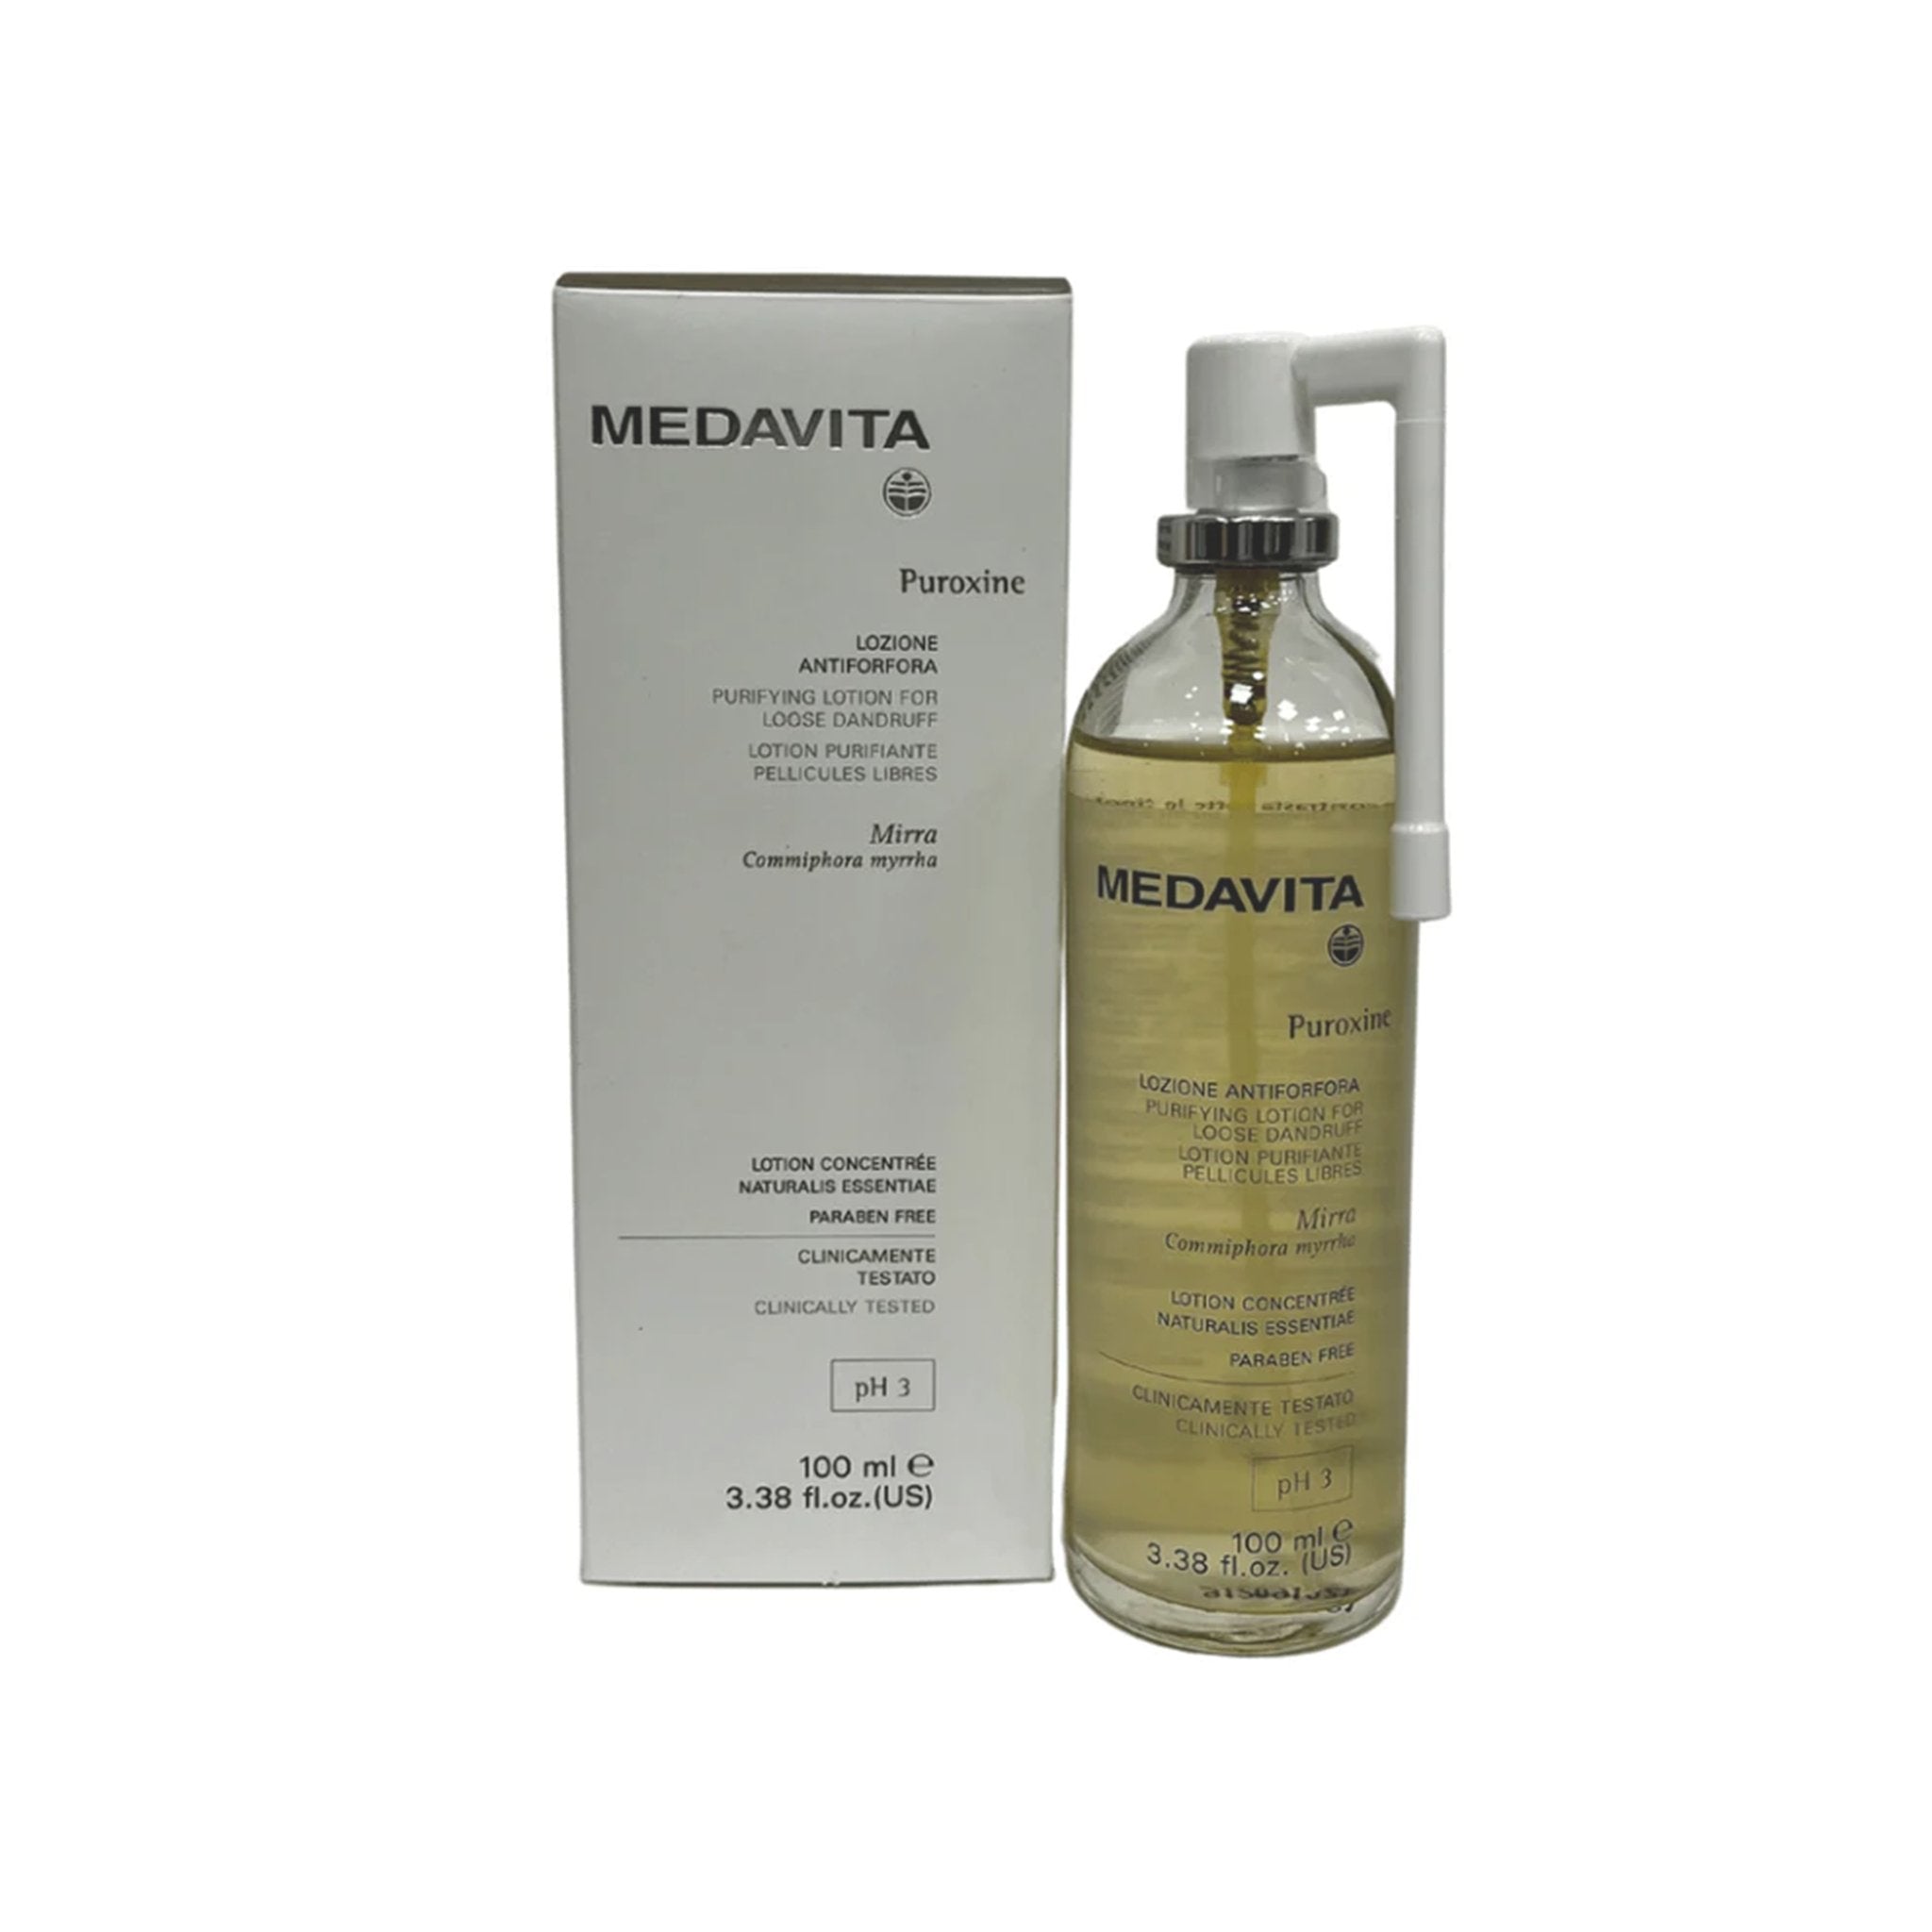 Medavita. Lotion Purifiante Pellicules Libres Puroxine - 100 ml - Concept C. Shop